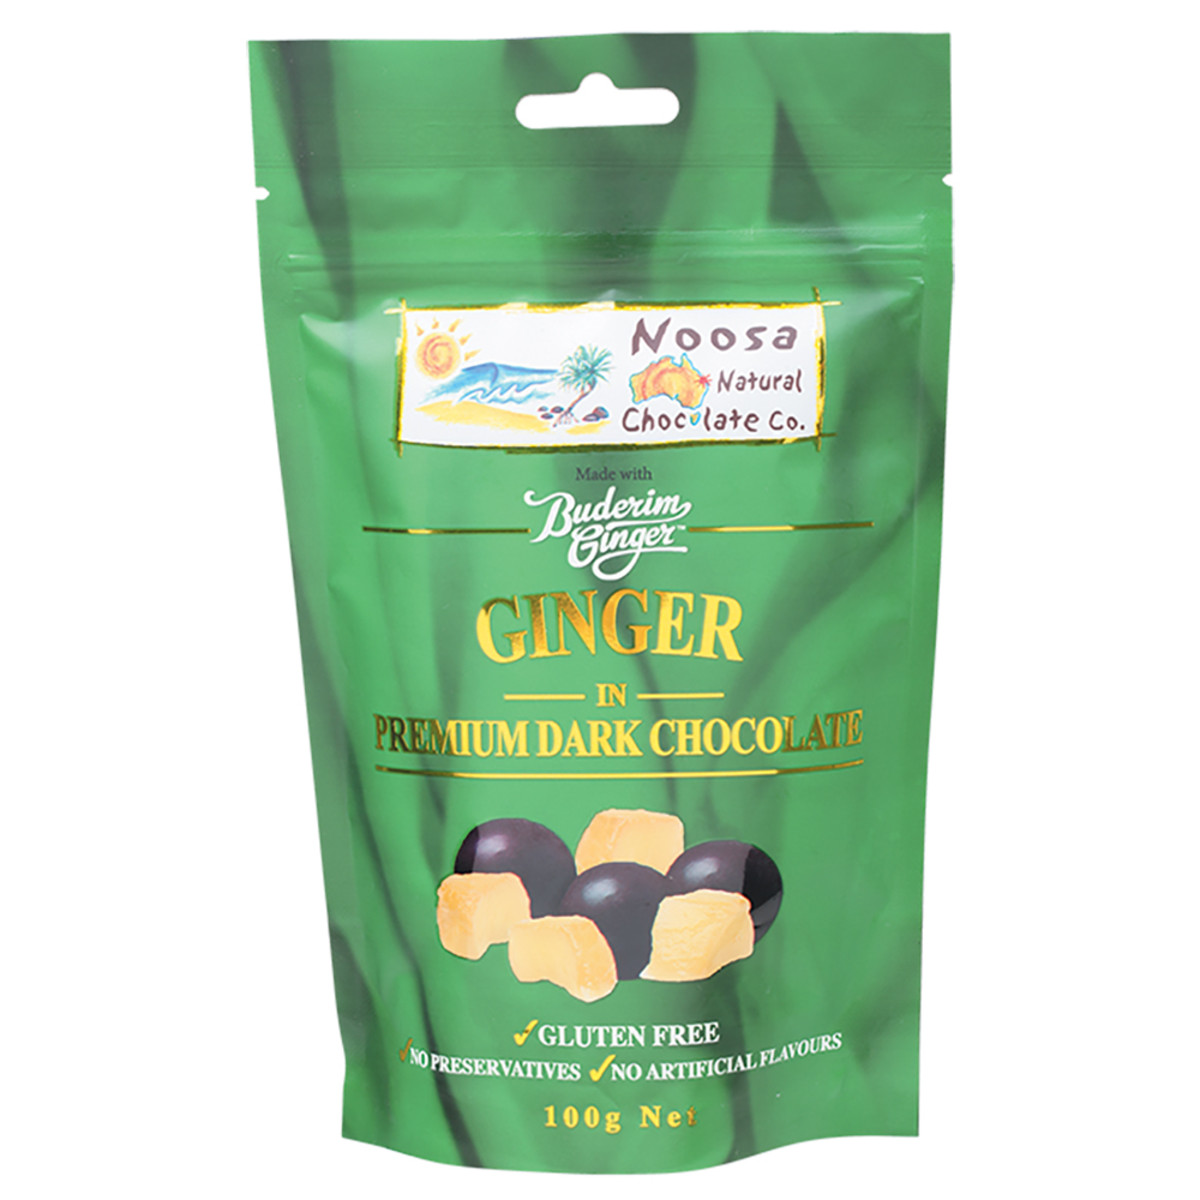 NOOSA NATURAL CHOC CO - Ginger in Dark Chocolate